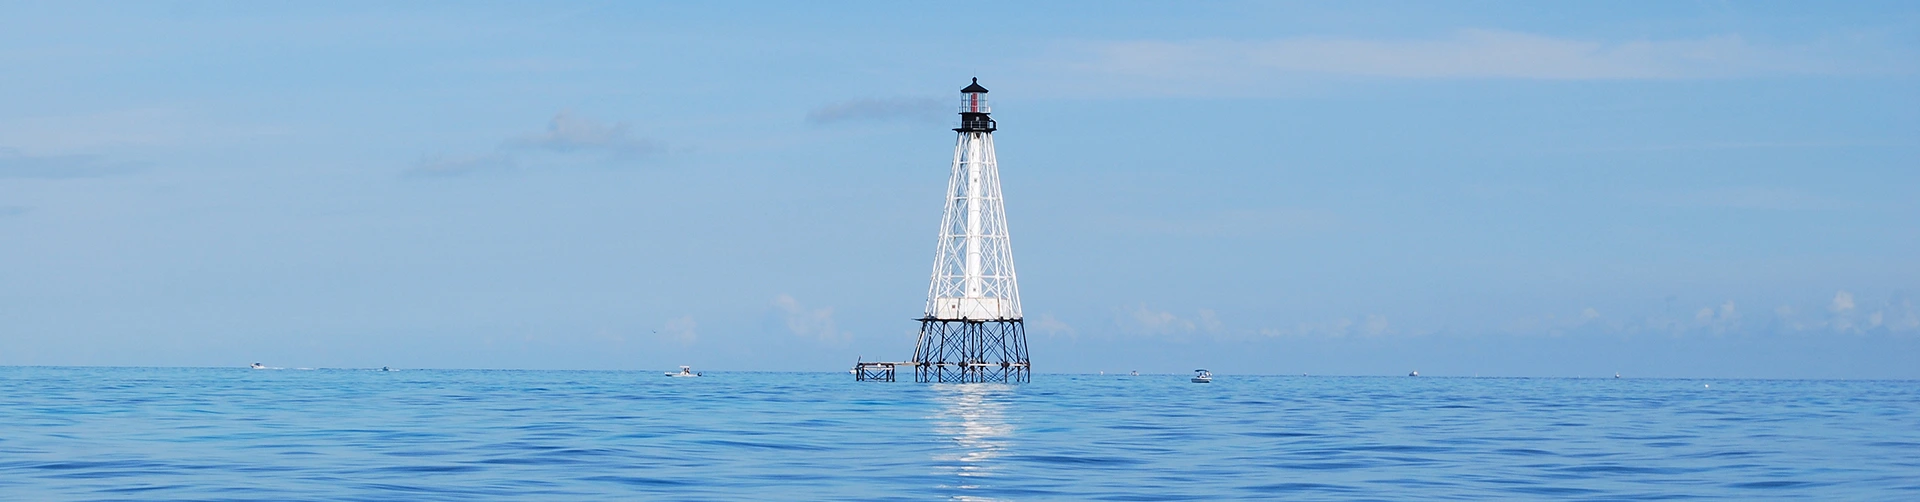 Alligator Lighthouse in Florida Keys